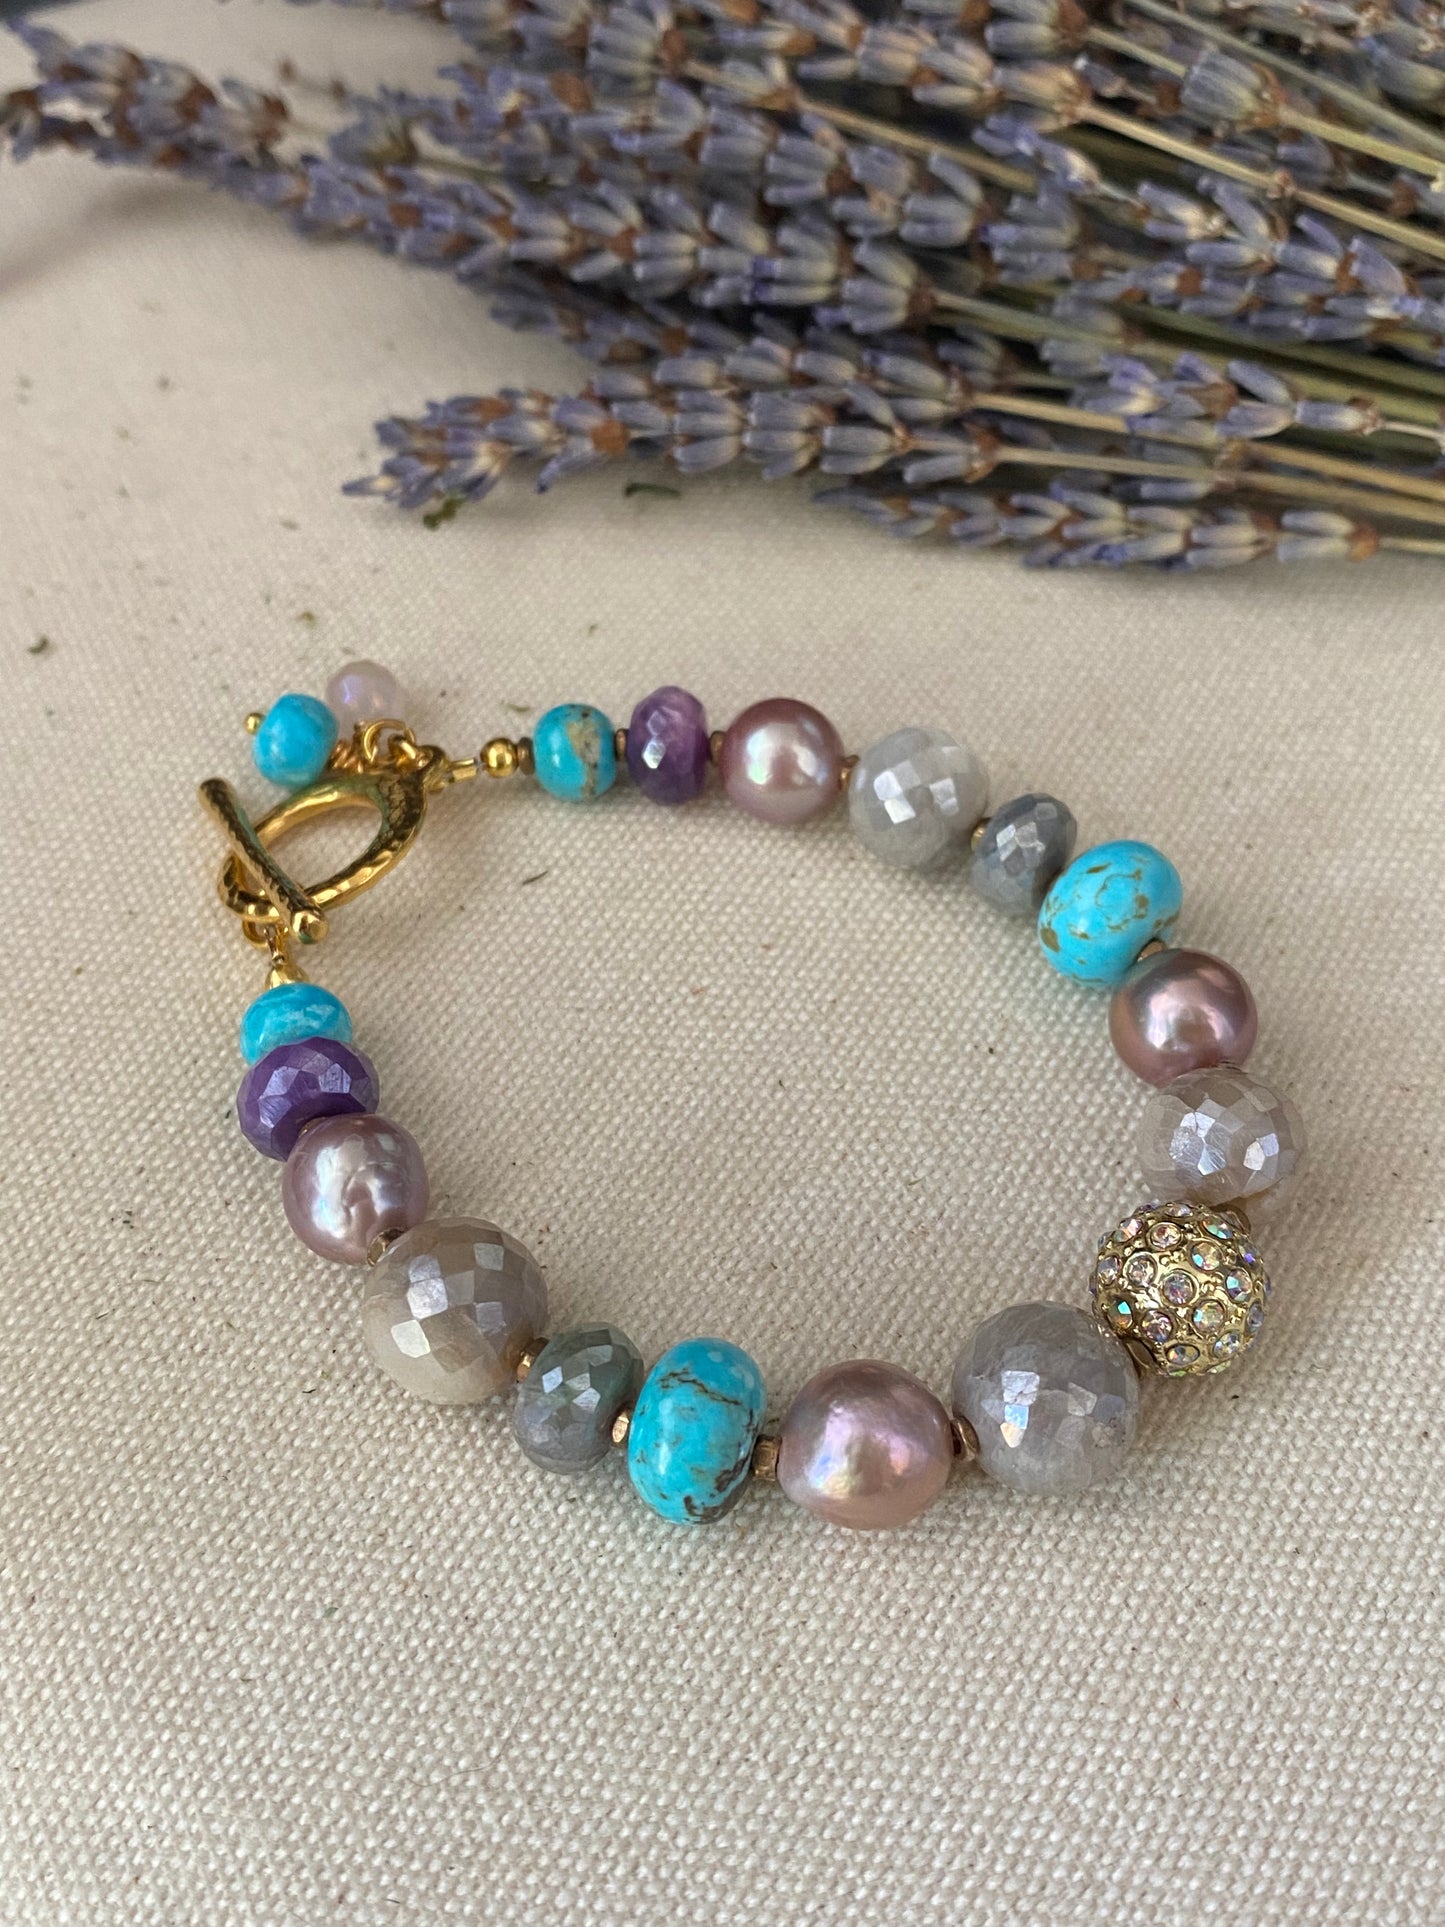 Pink pearls, blue turquoise stone, mystic moonstone, gold metal, bracelet.